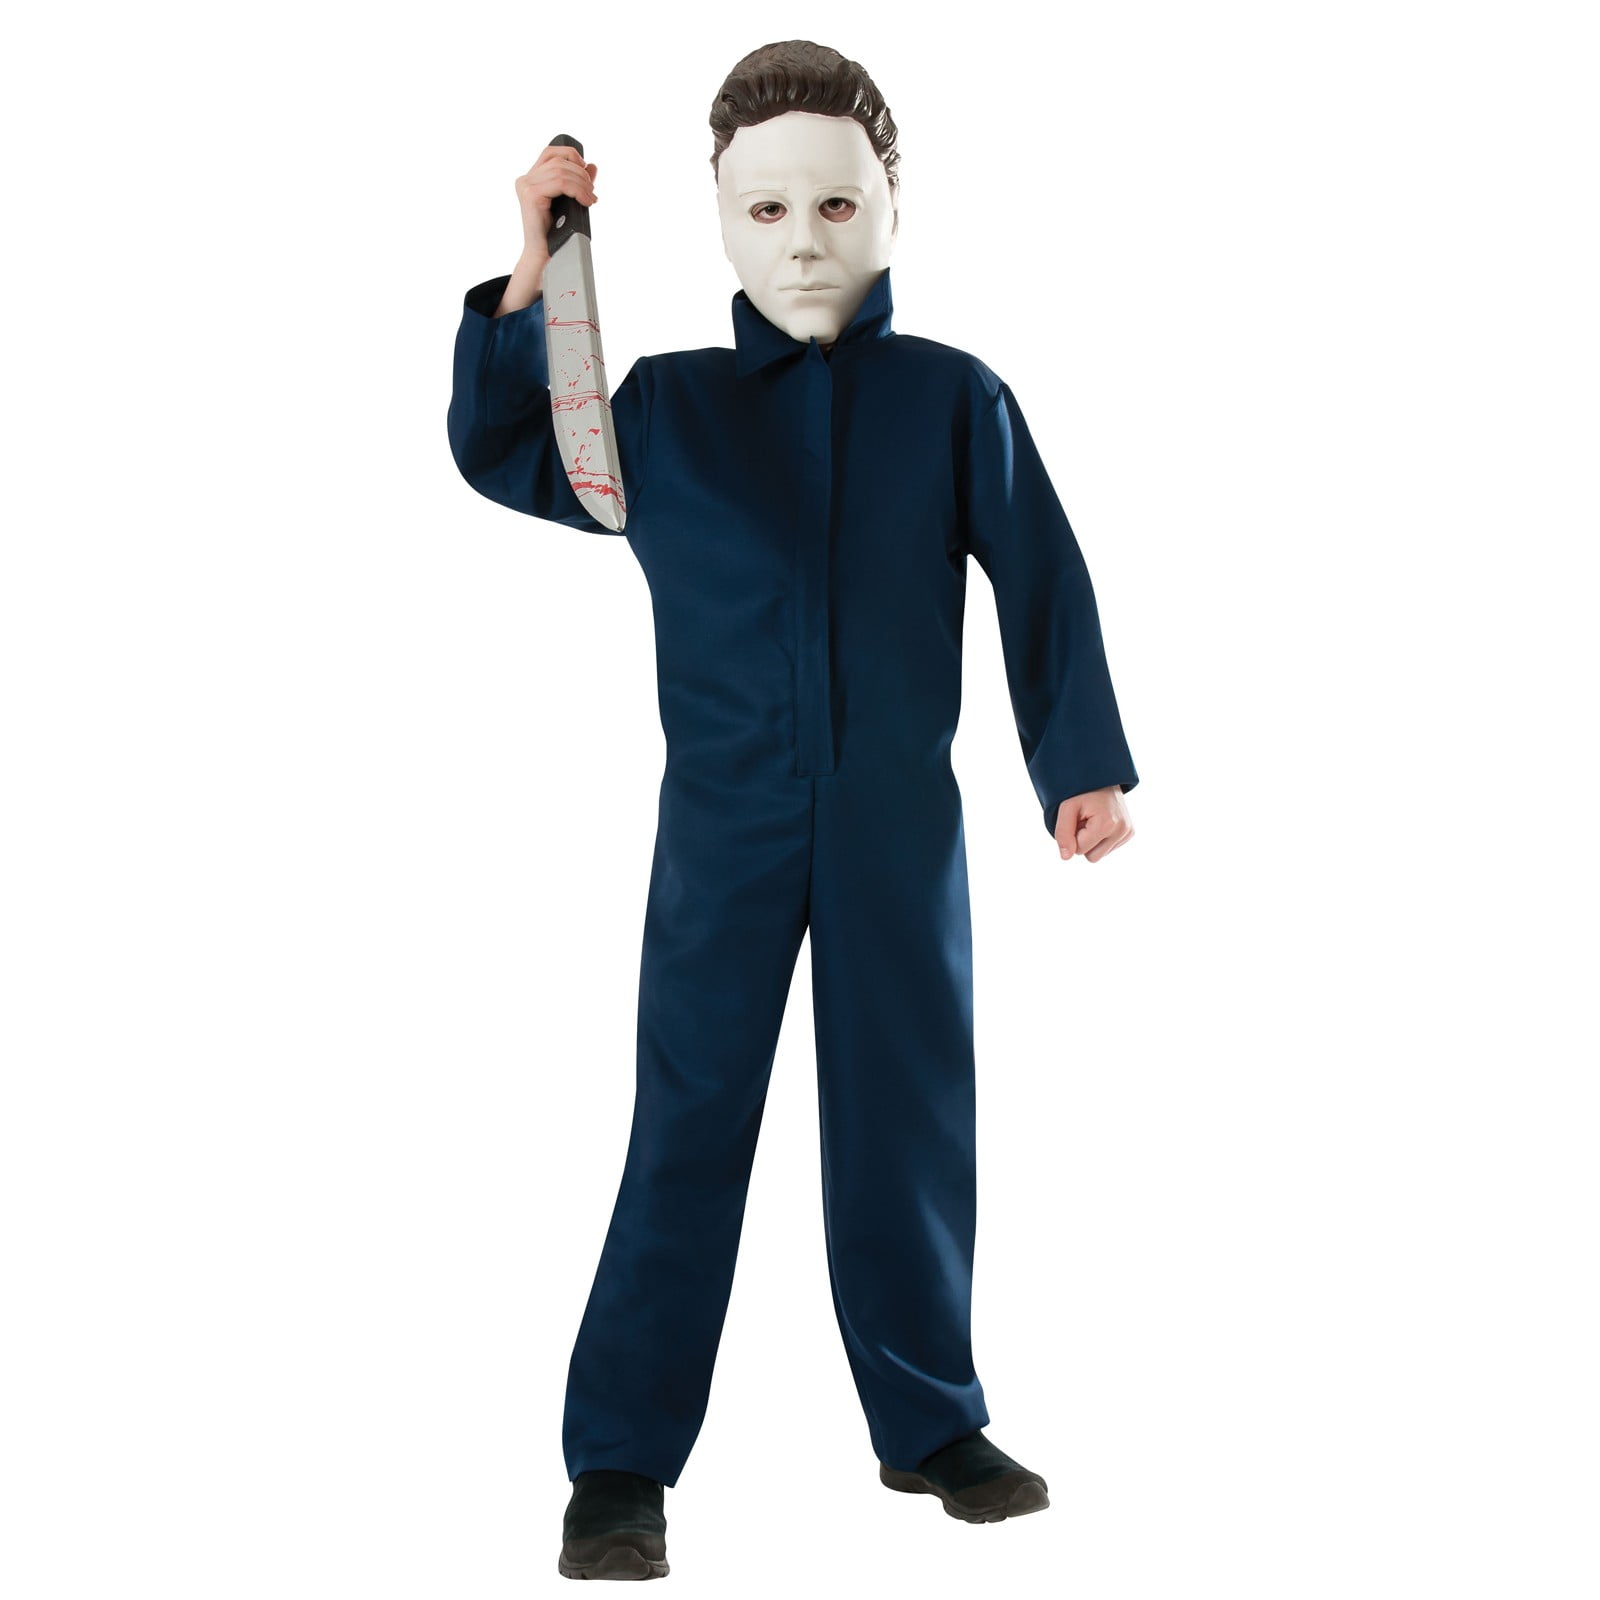 Michael Myers Costume - Walmart.com.